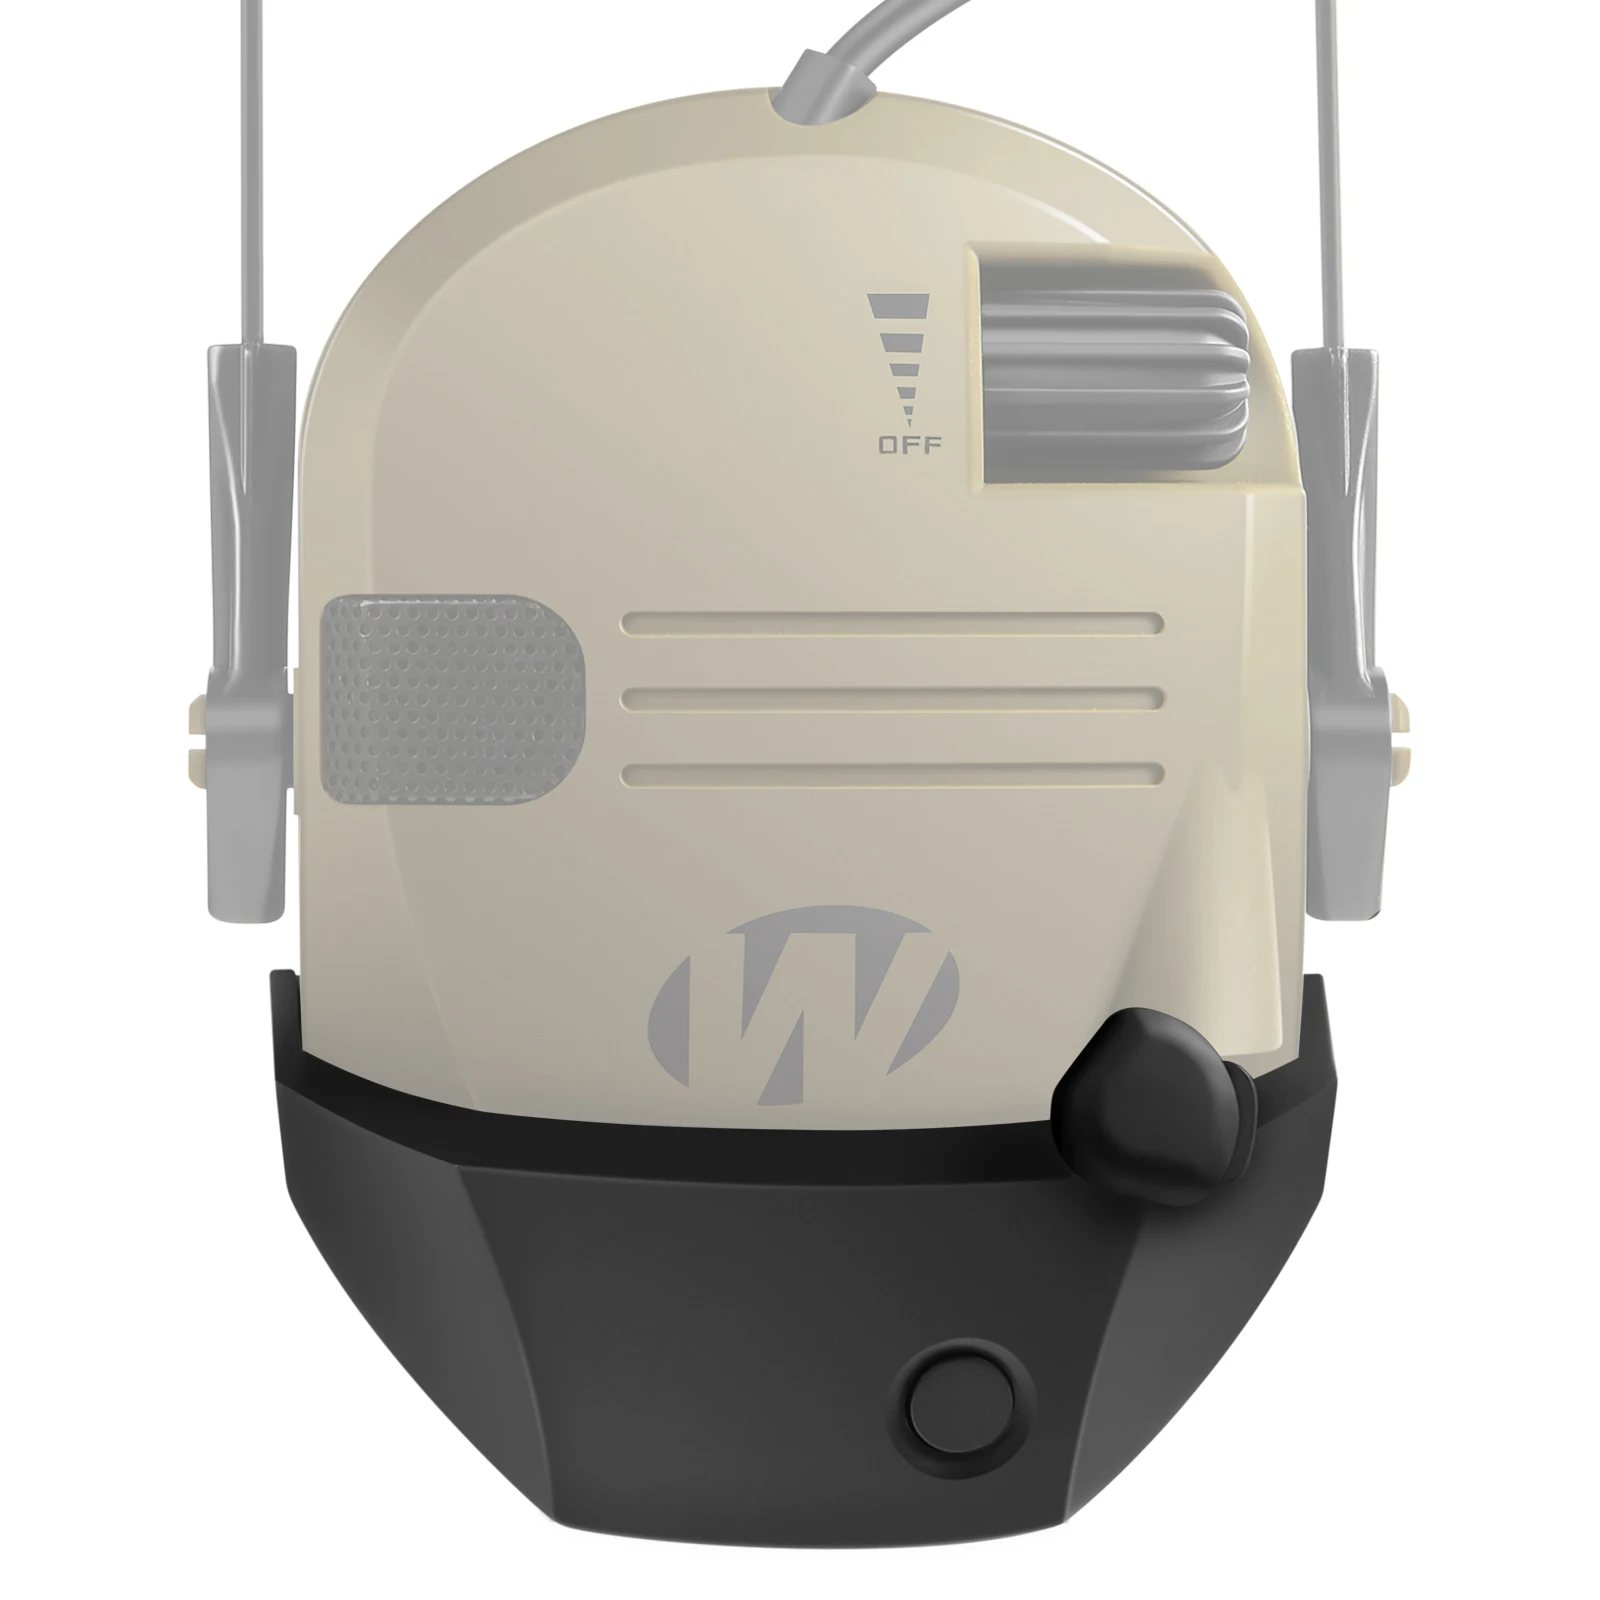 Tanio W1 Adapter Bluetooth projekt dla Walker's serii